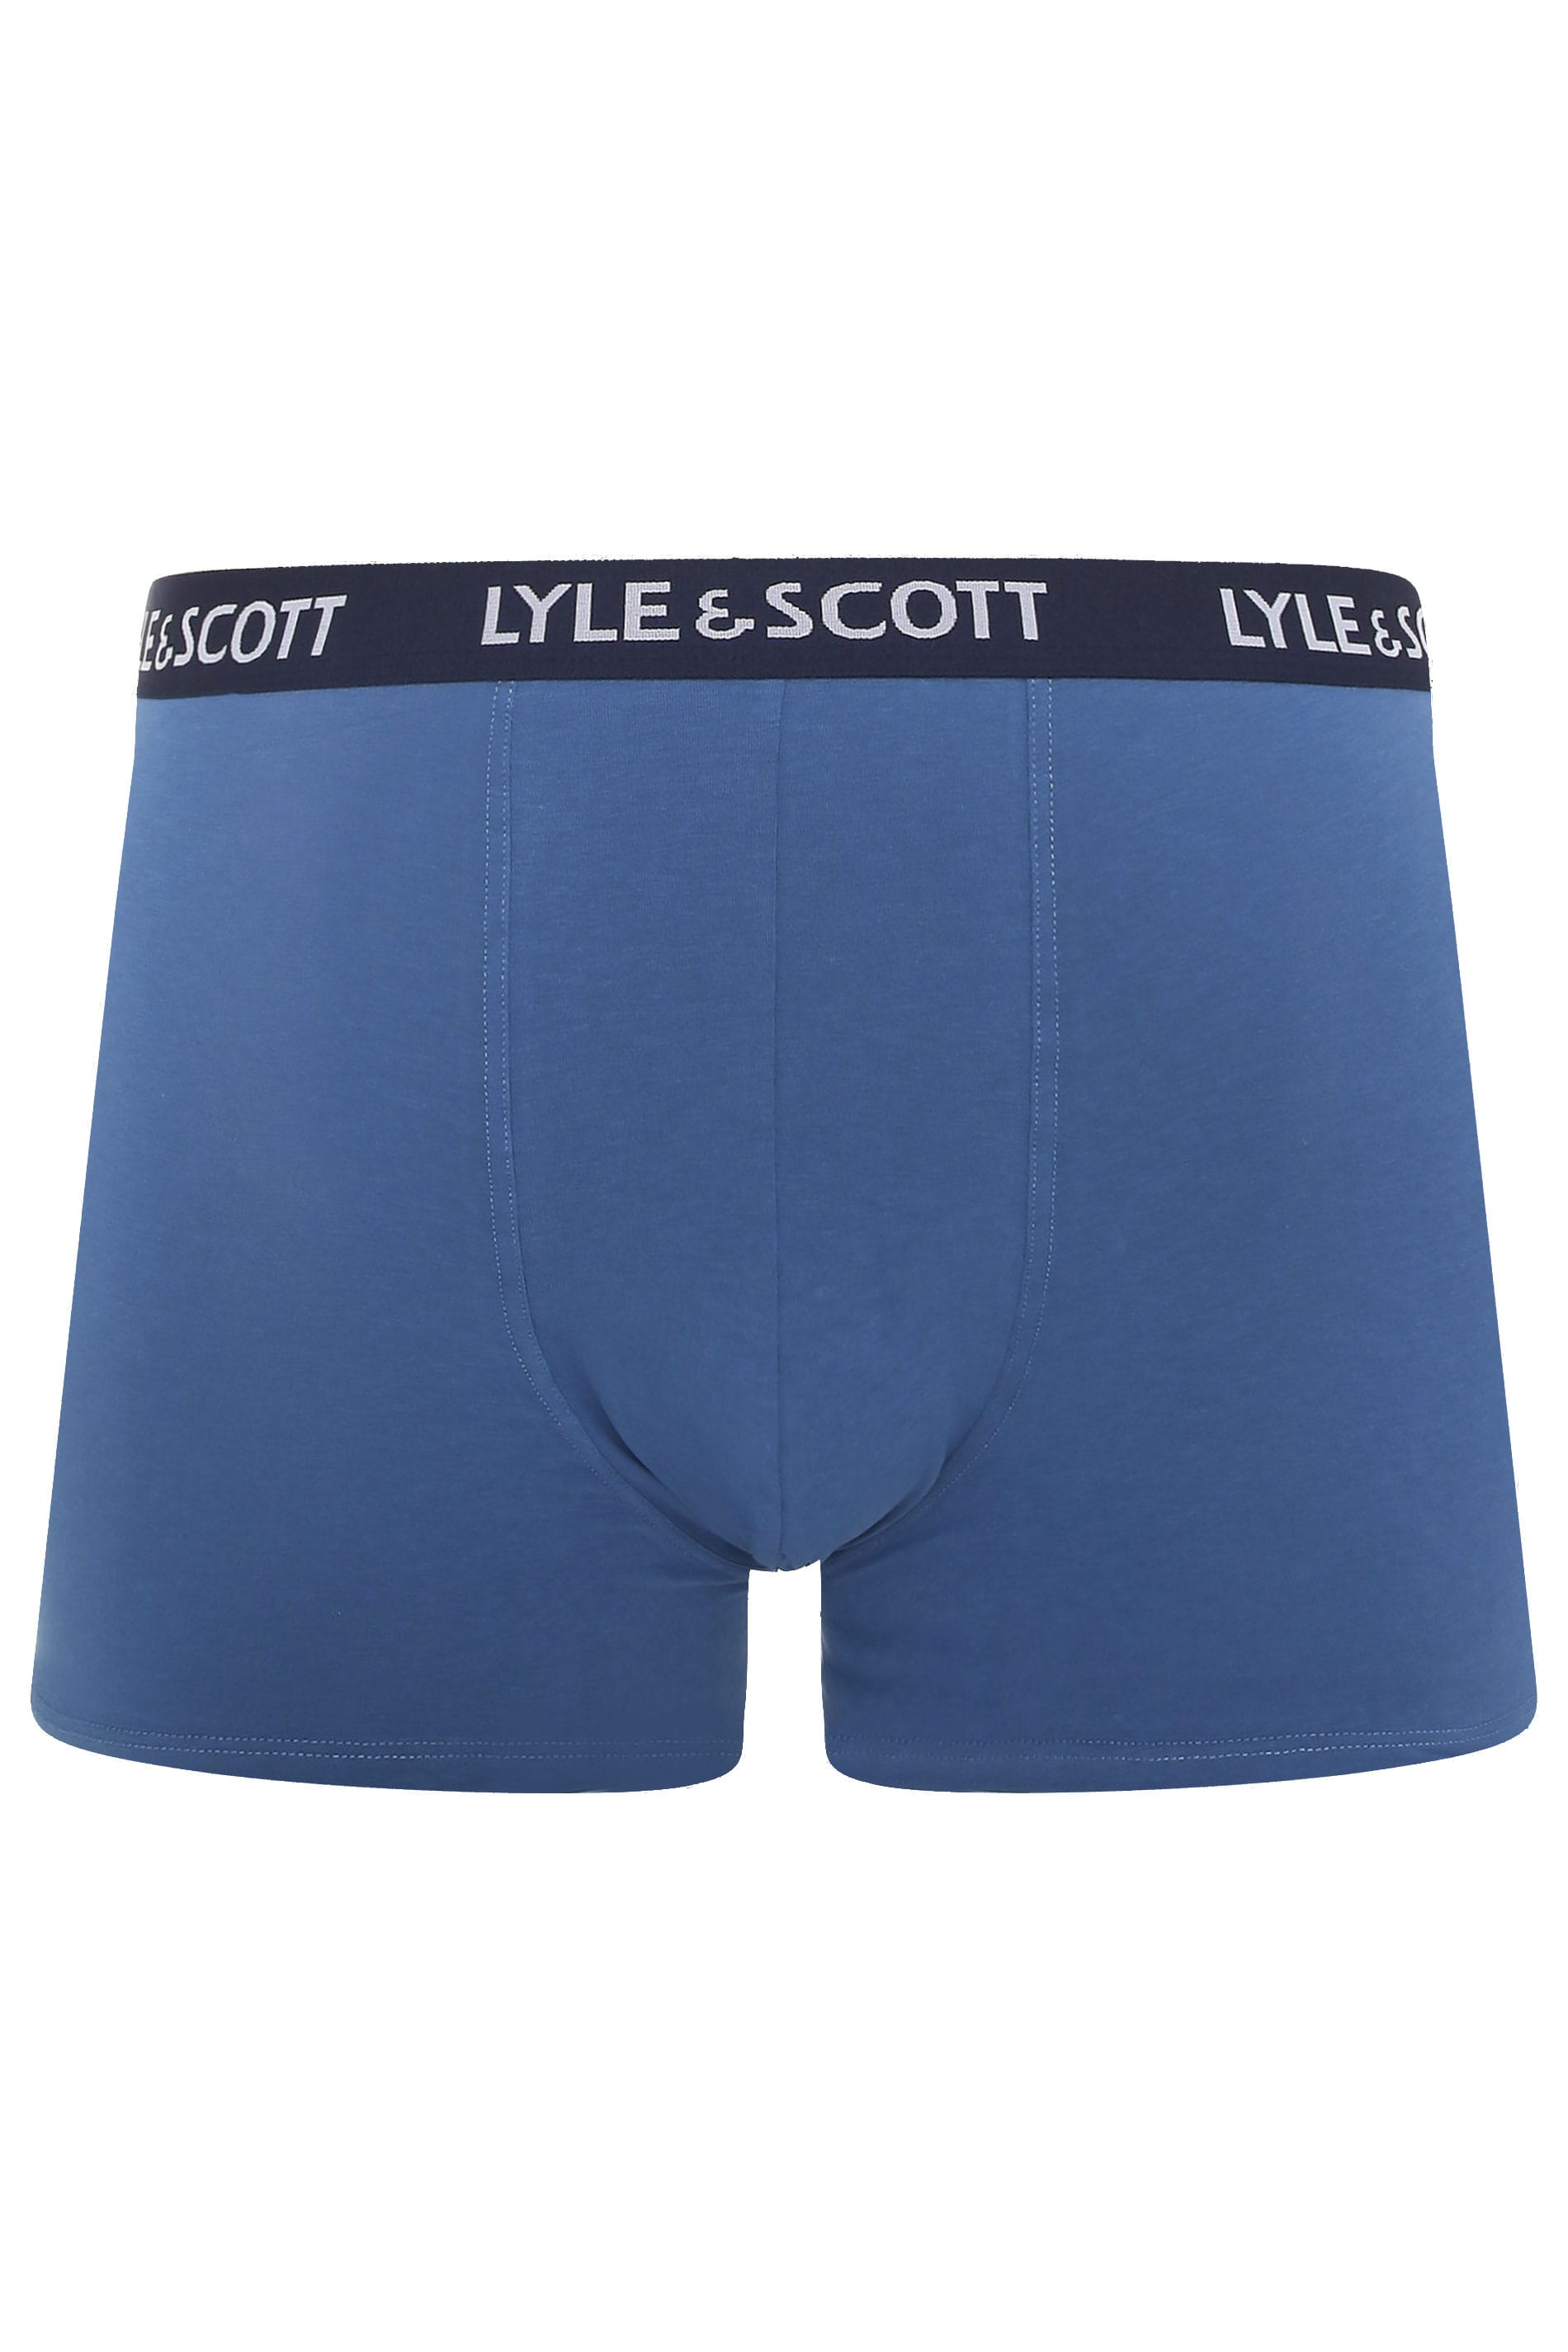 LYLE & SCOTT Blue 3 PACK Barclay Boxers | BadRhino